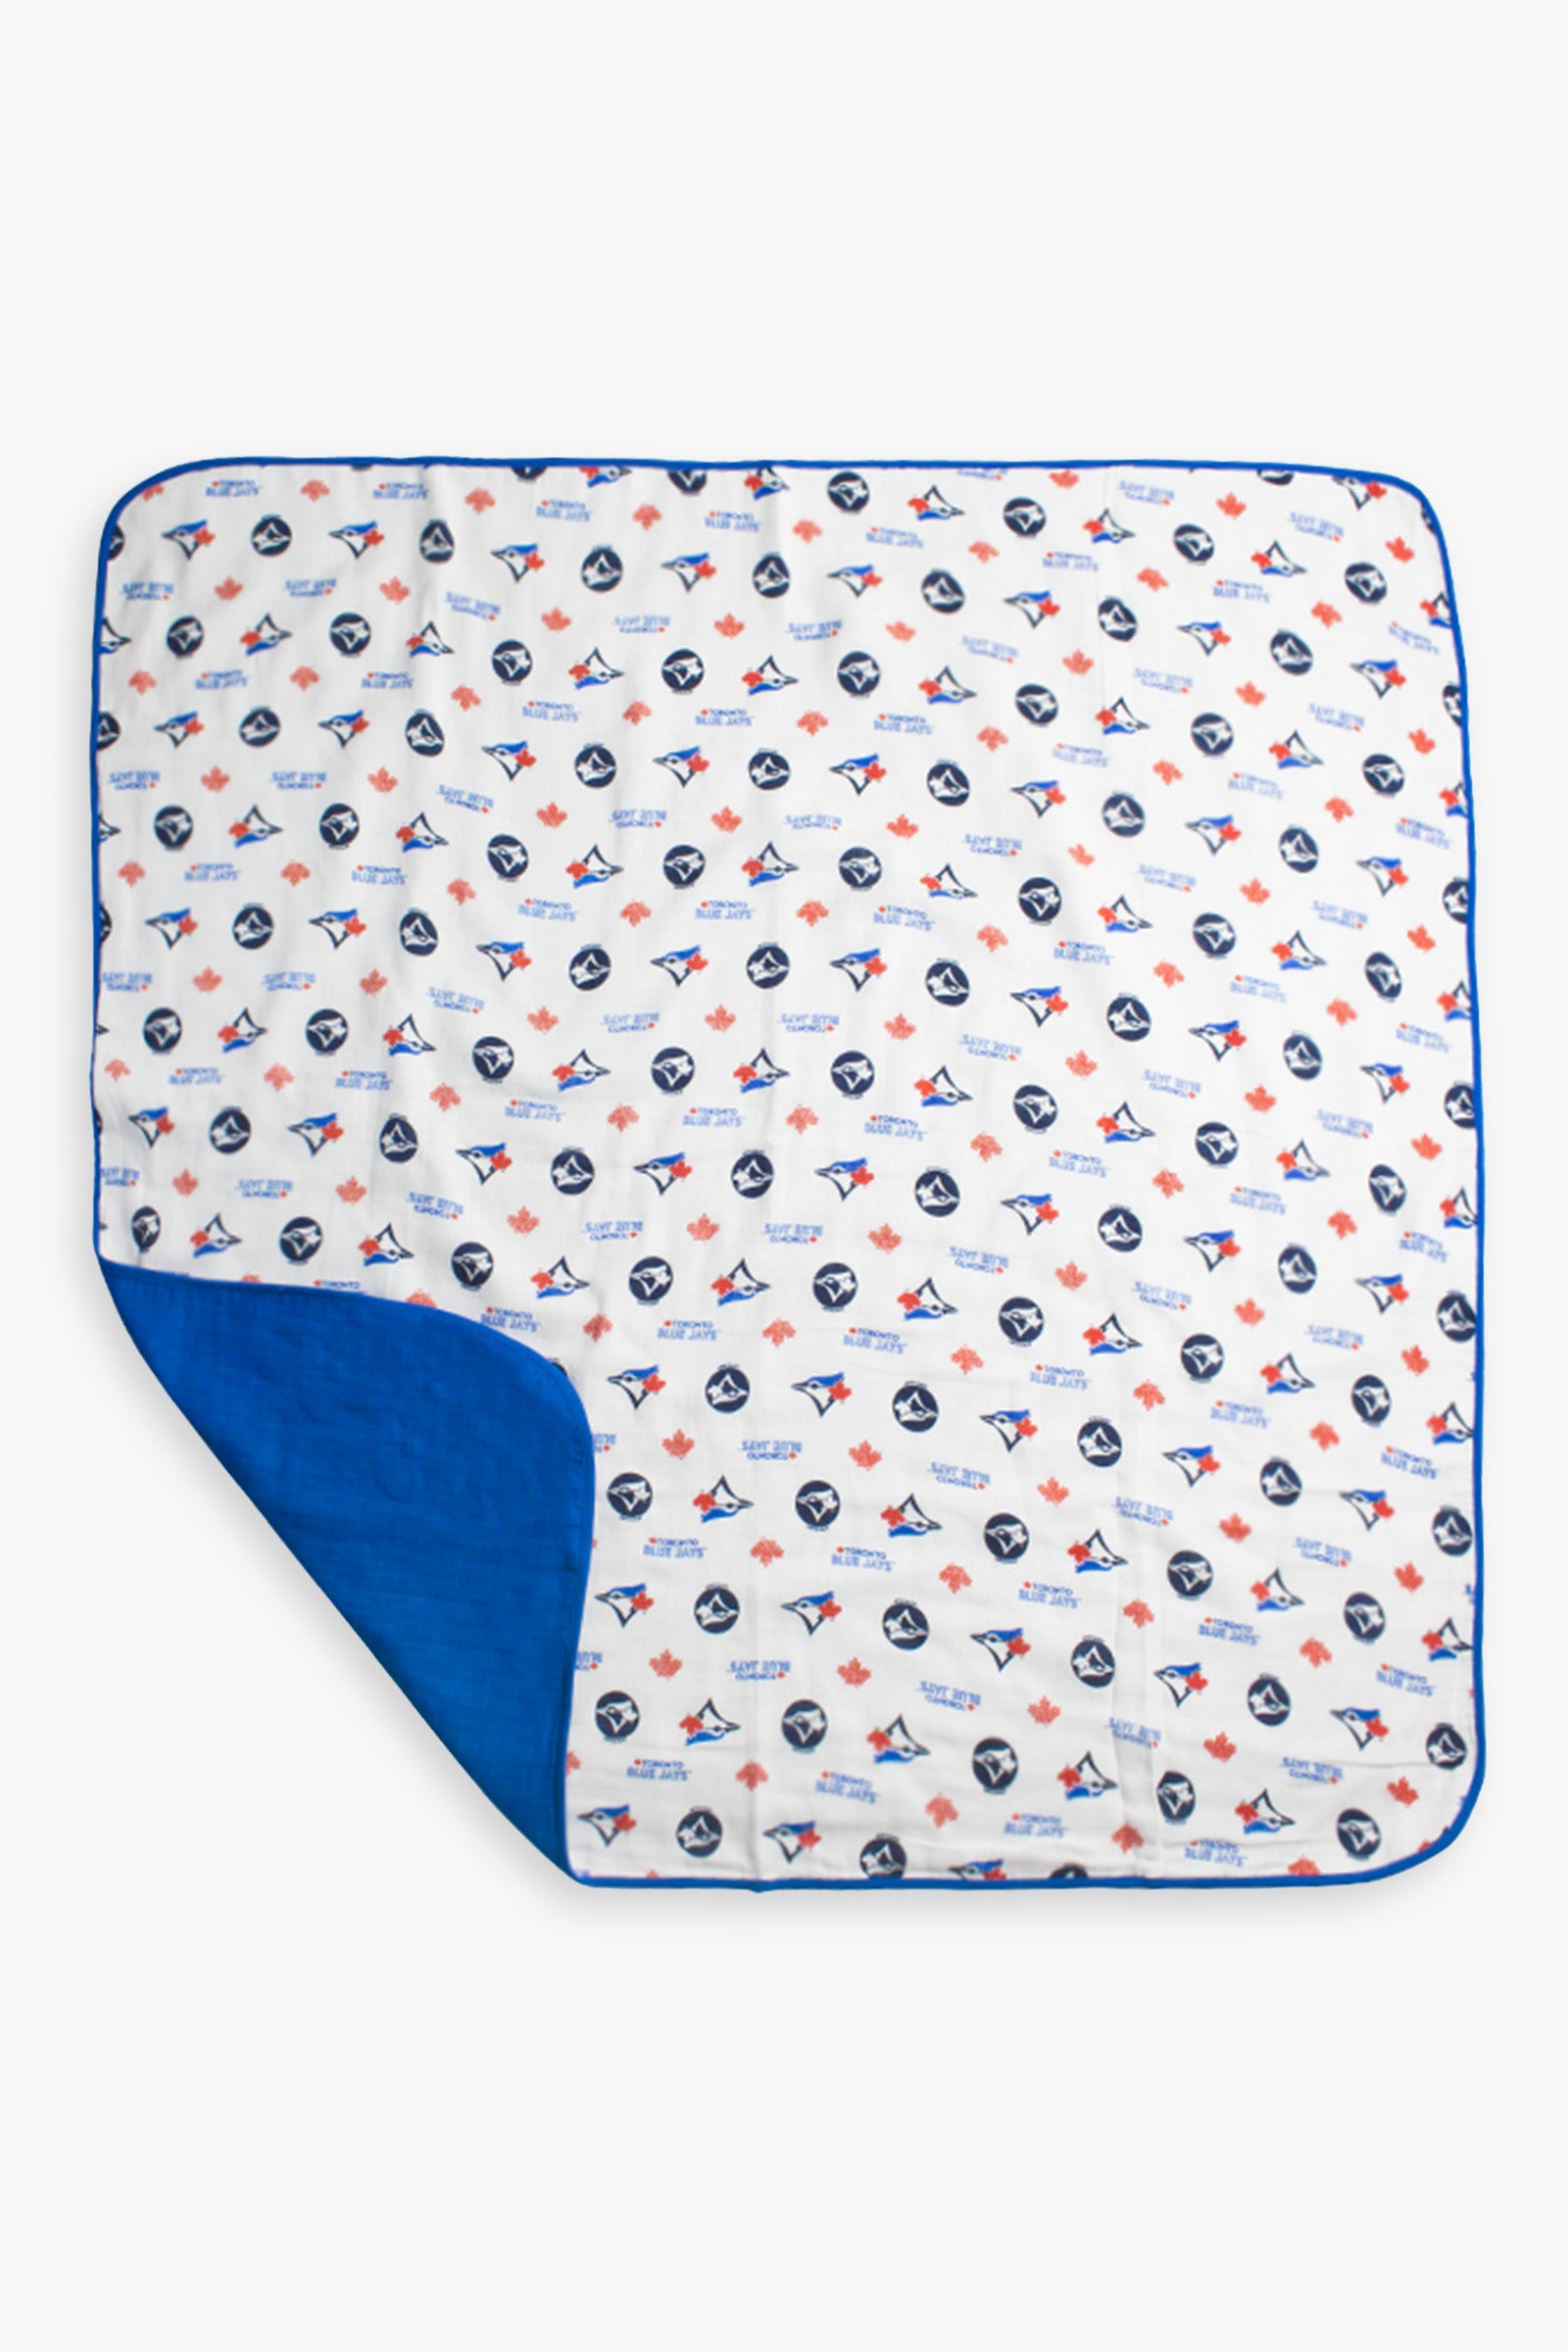 MLB Toronto Blue Jays Baby Muslin Blanket